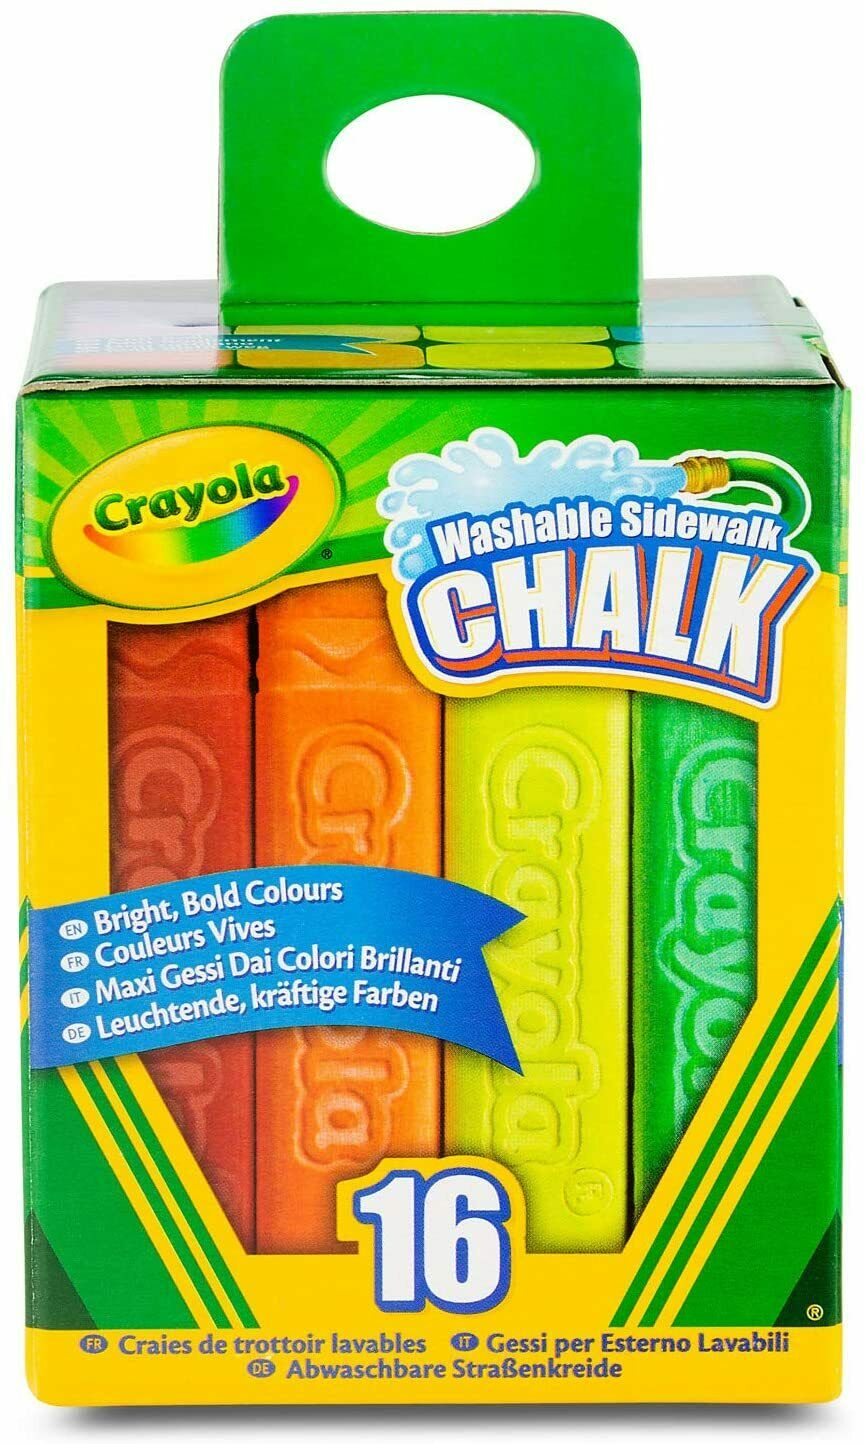 Crayola Washable Sidewalk Chalk, Outdoor Toy, Gift for Kids, 16 Count wash away